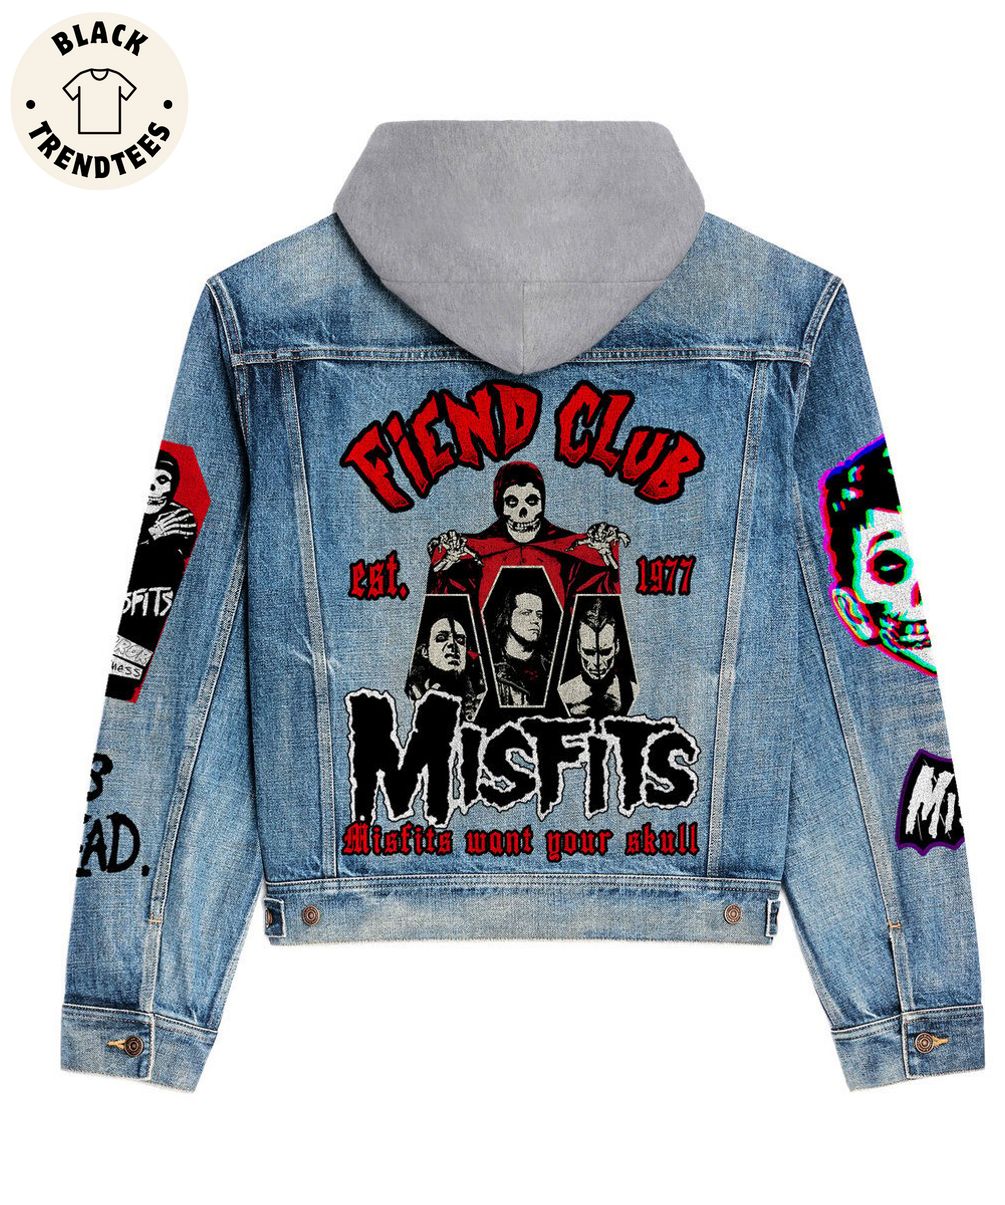 Fiend Club Misfits Want Your Skull Hooded Denim Jacket